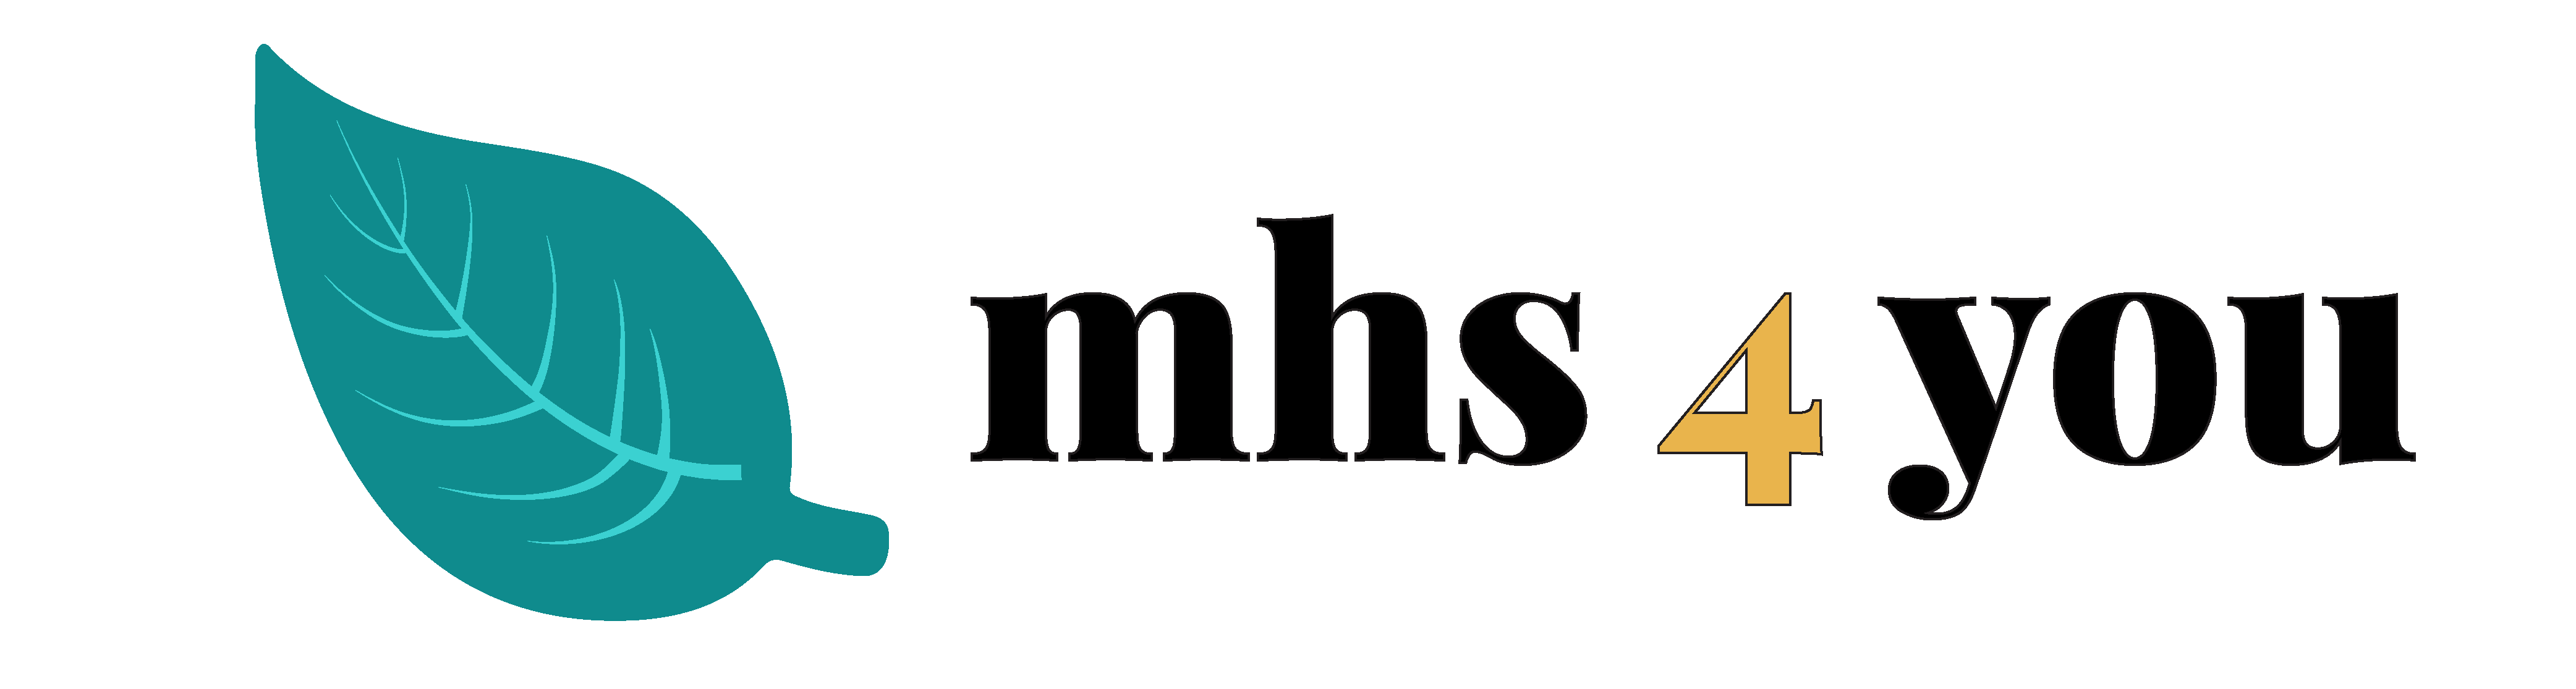 mhs 4 you logo - Schrift stärker - 1 - black